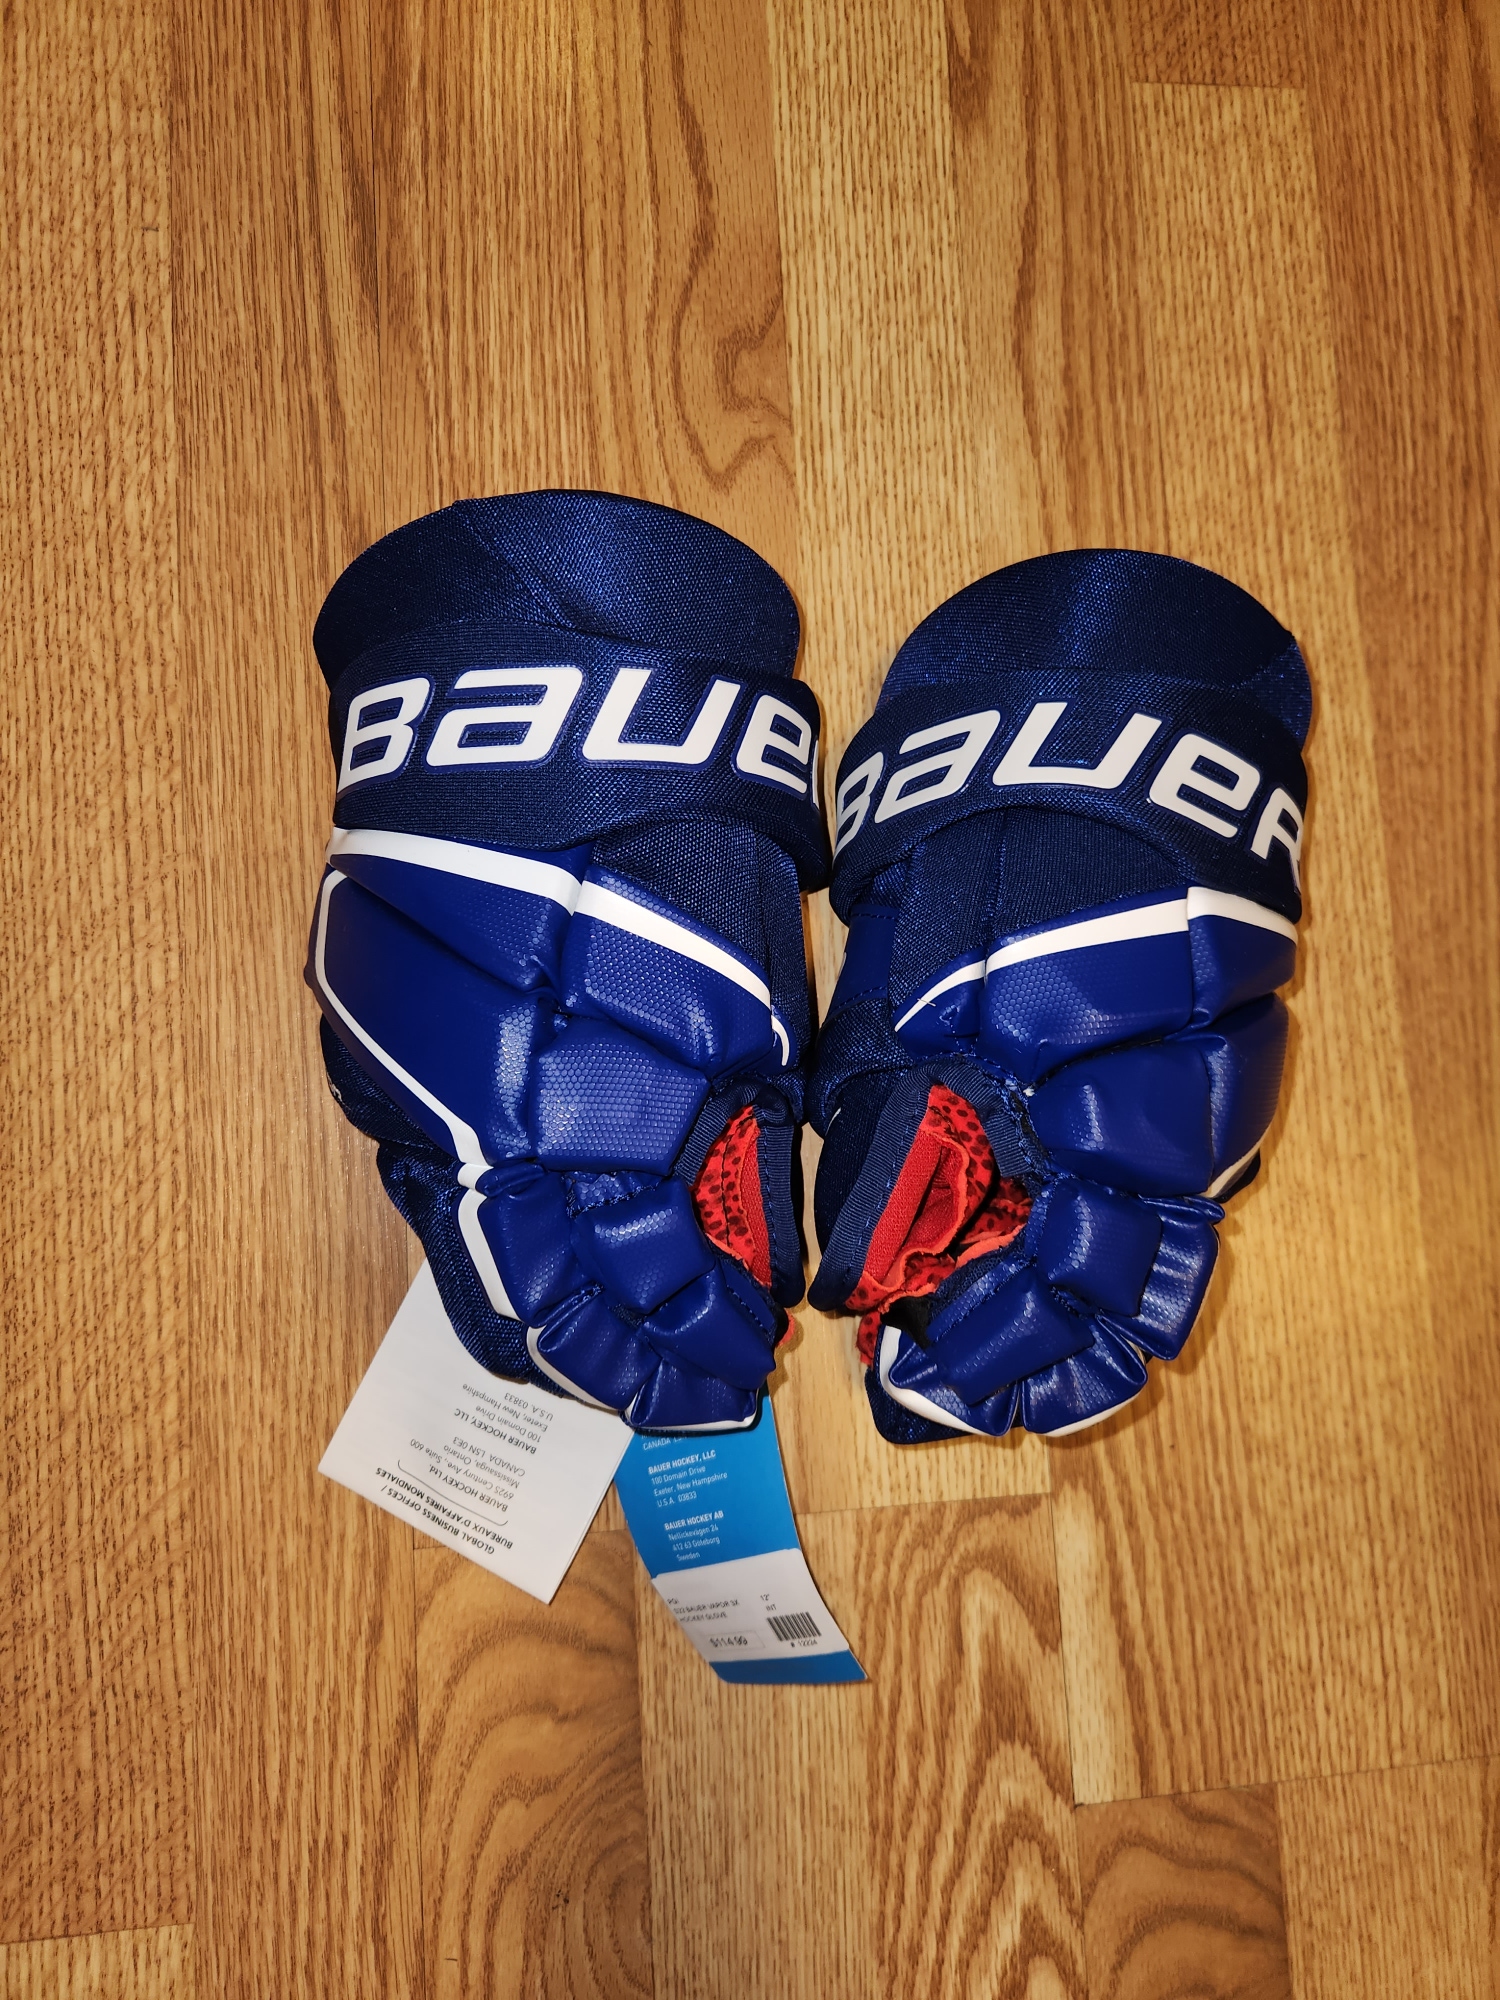 New Bauer Vapor 3X Gloves 12"